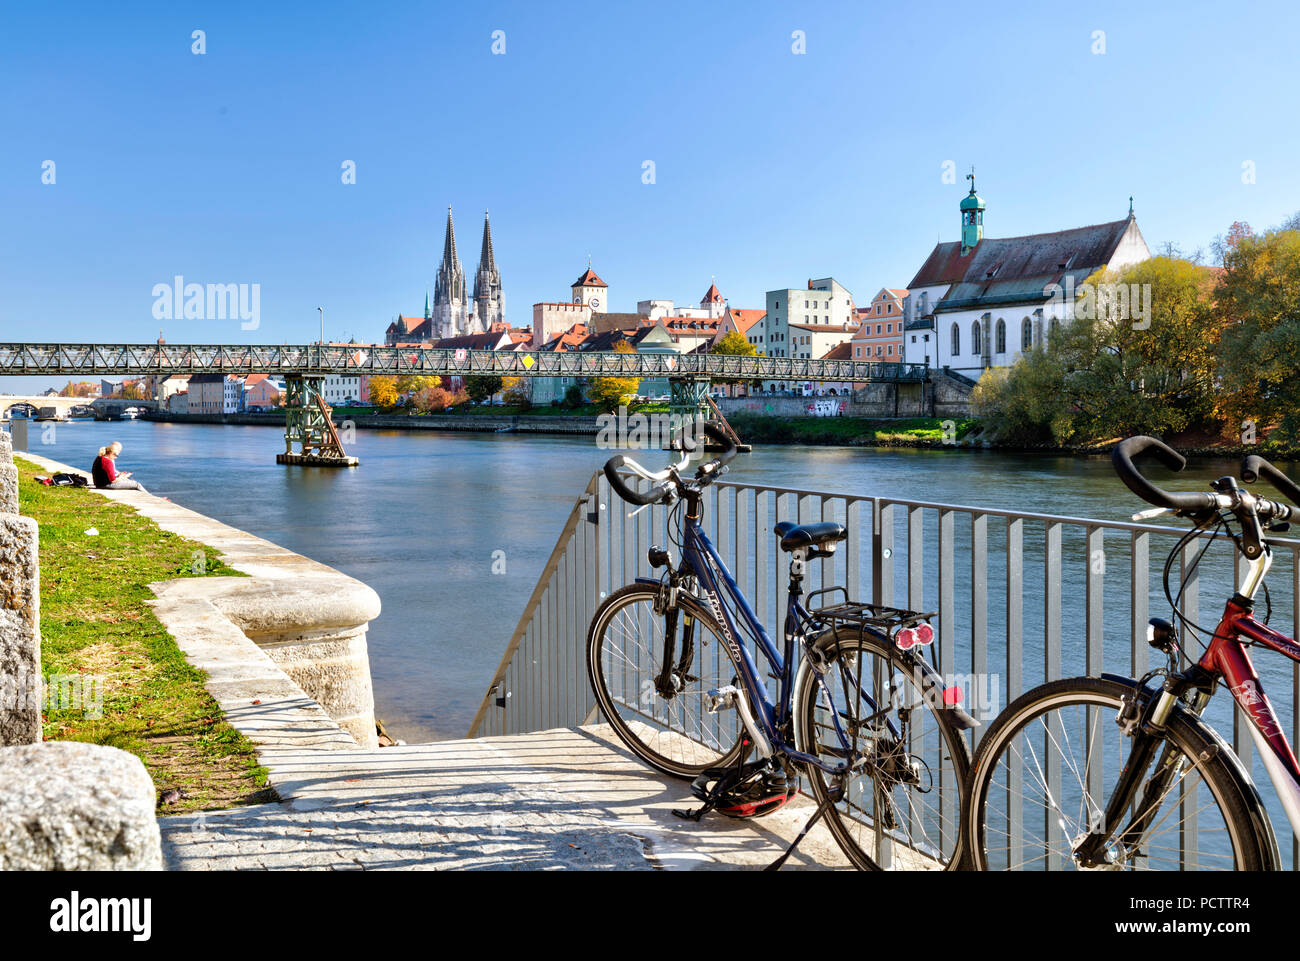 View from the Jahn Island, Eiserner Steg, cathedral, waterfront, autumn, Regensburg, Upper Palatinate, Bavaria, Germany, Europe Stock Photo